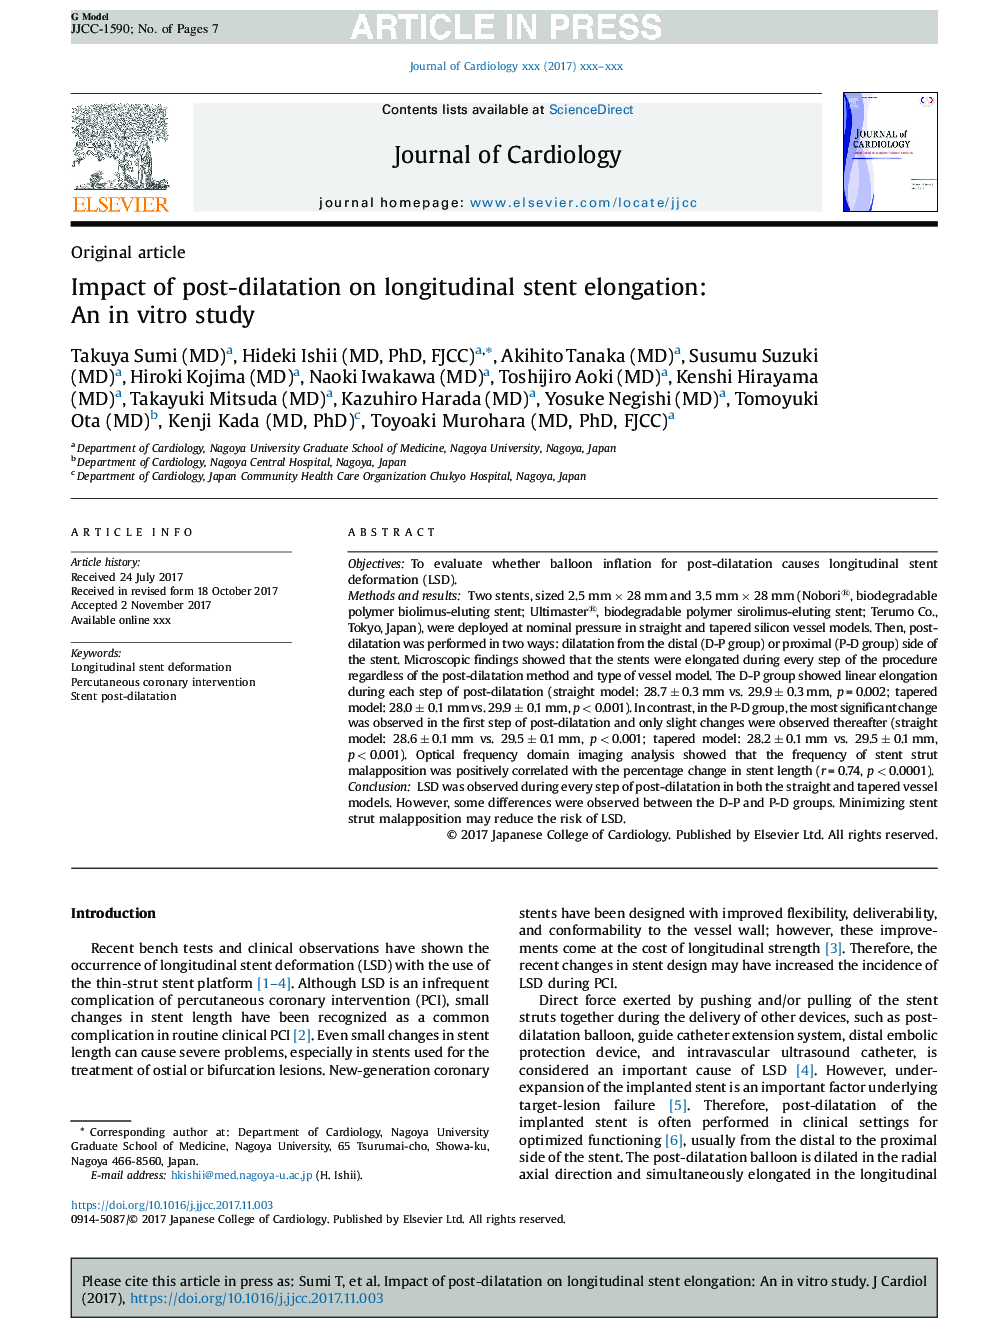 Impact of post-dilatation on longitudinal stent elongation: An in vitro study